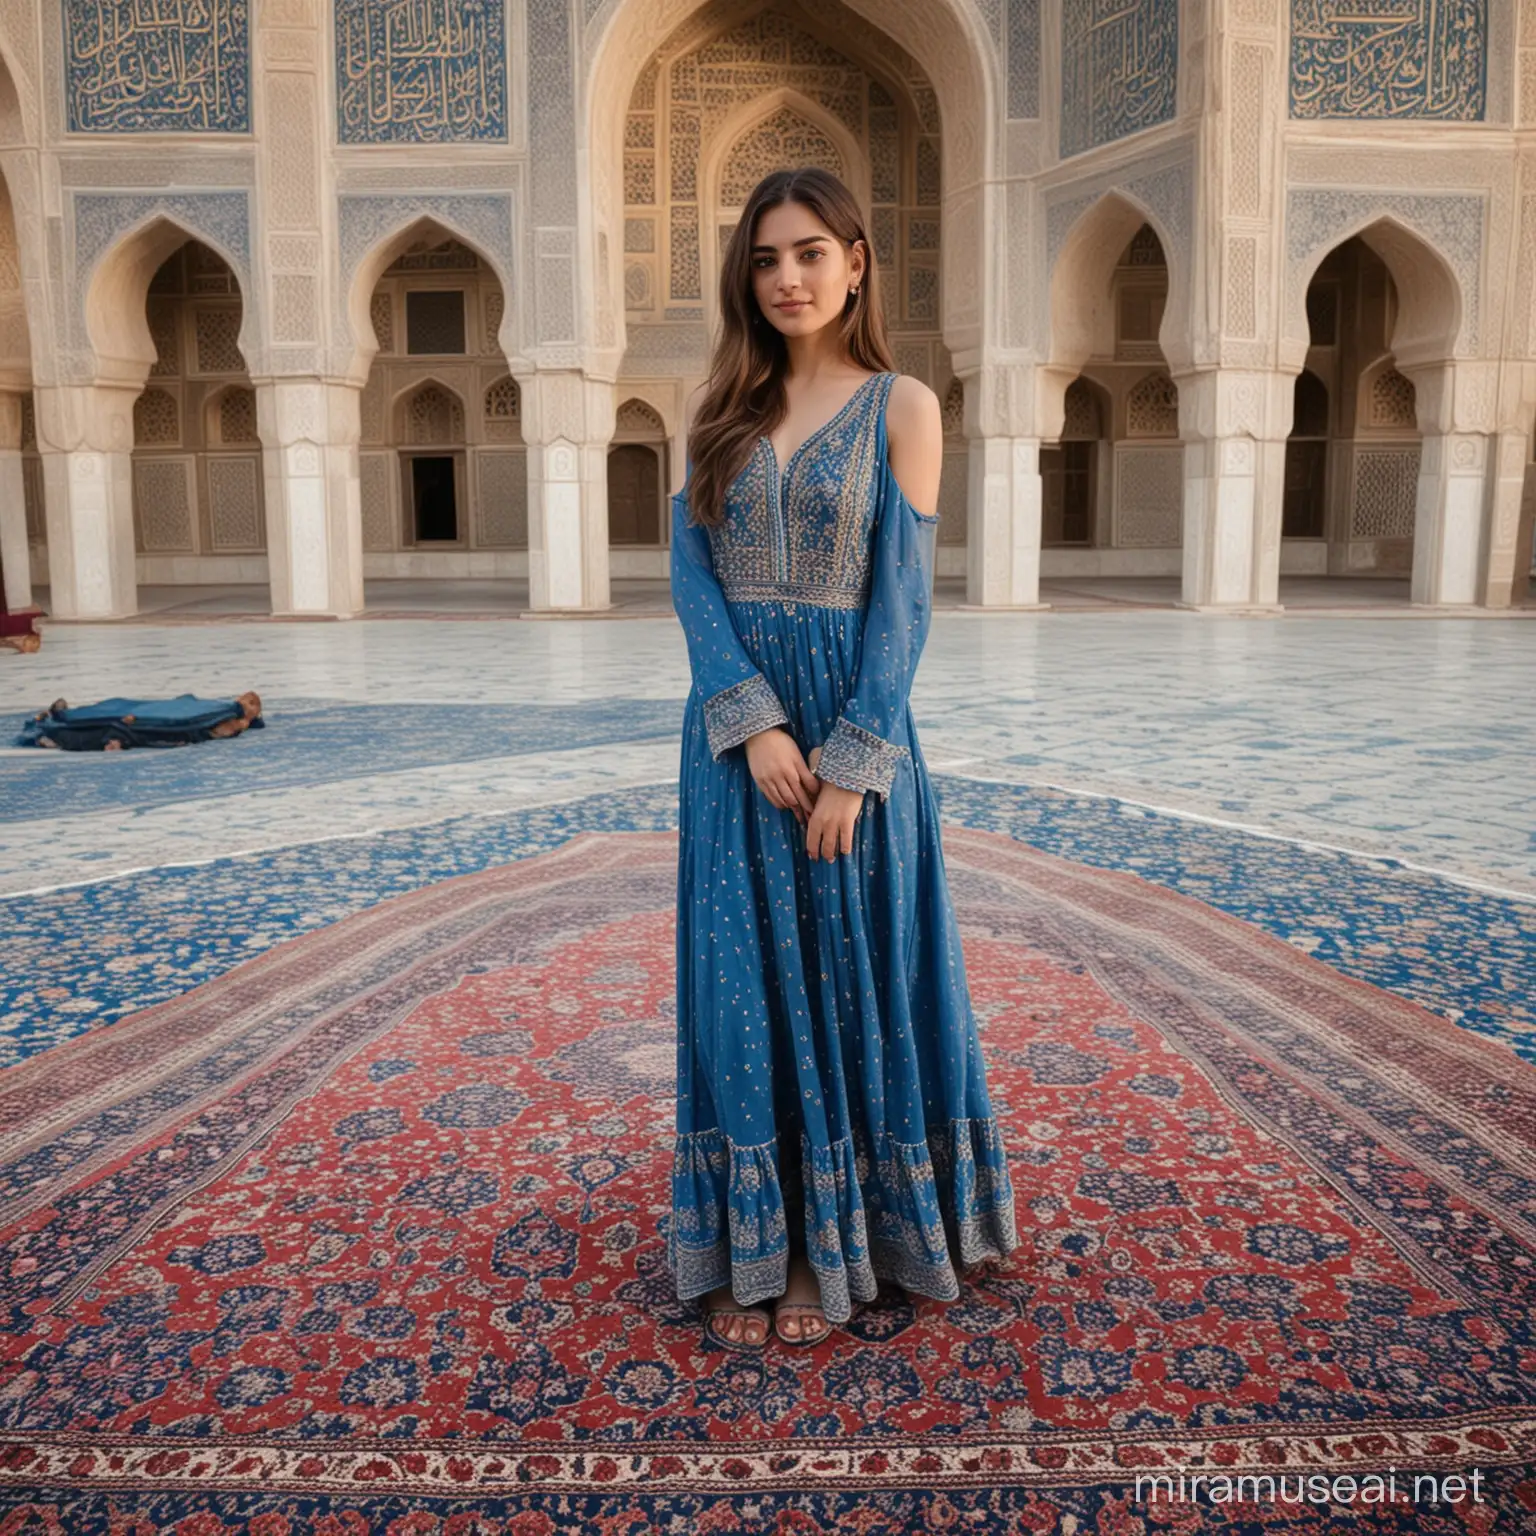 Persian Girl in Elegant Persian Blue Dress on Ornate Persian Blue Carpet in Mosque Setting